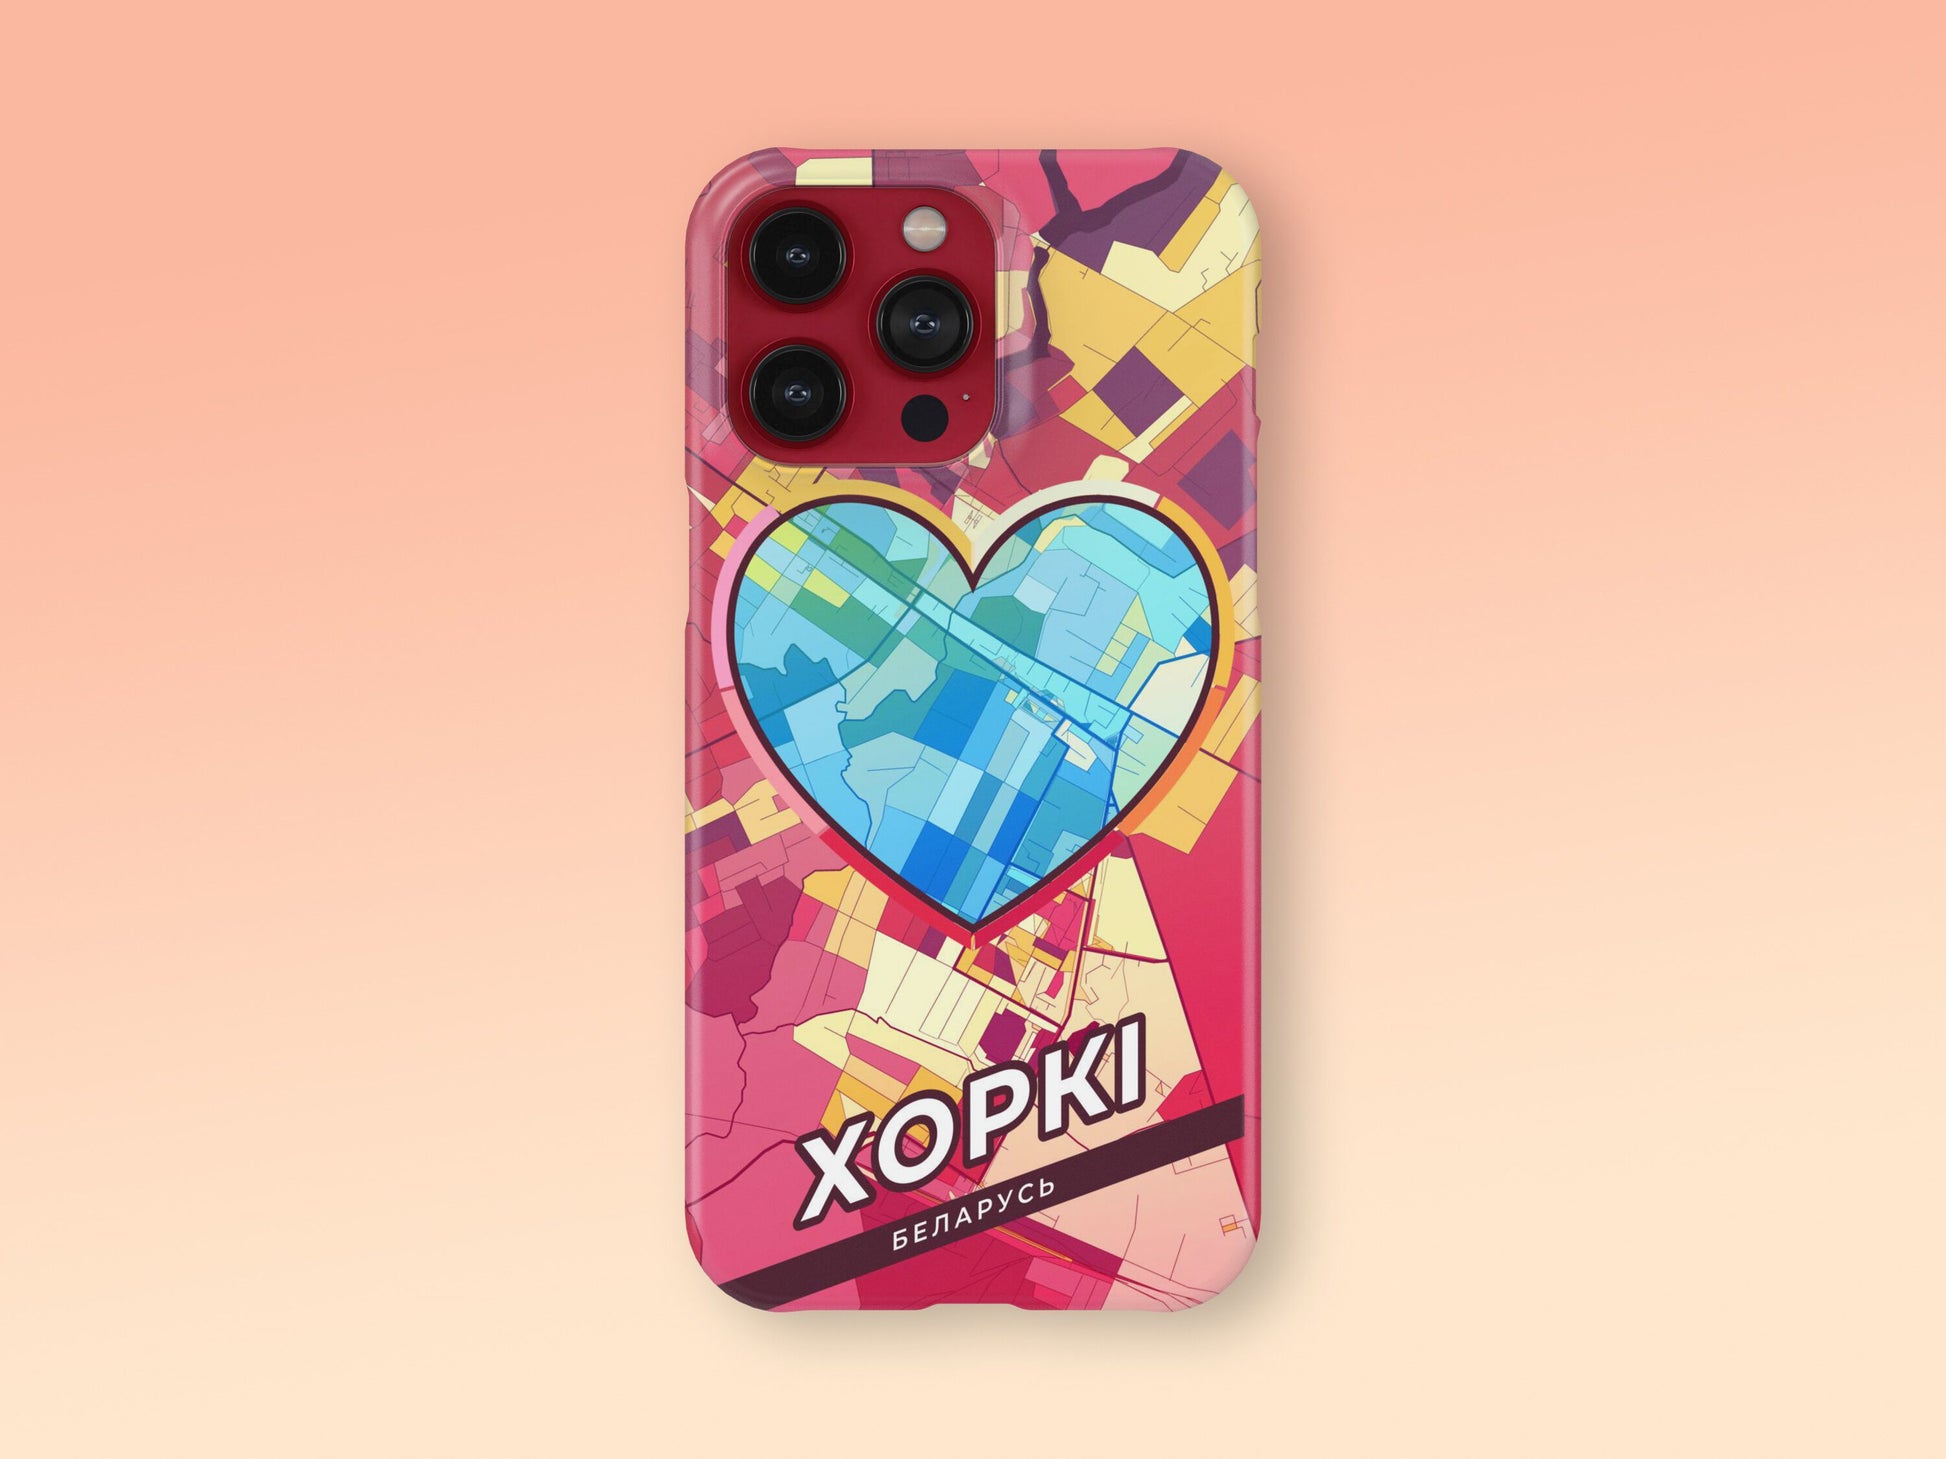 Хоркі Беларусь slim phone case with colorful icon. Birthday, wedding or housewarming gift. Couple match cases. 2